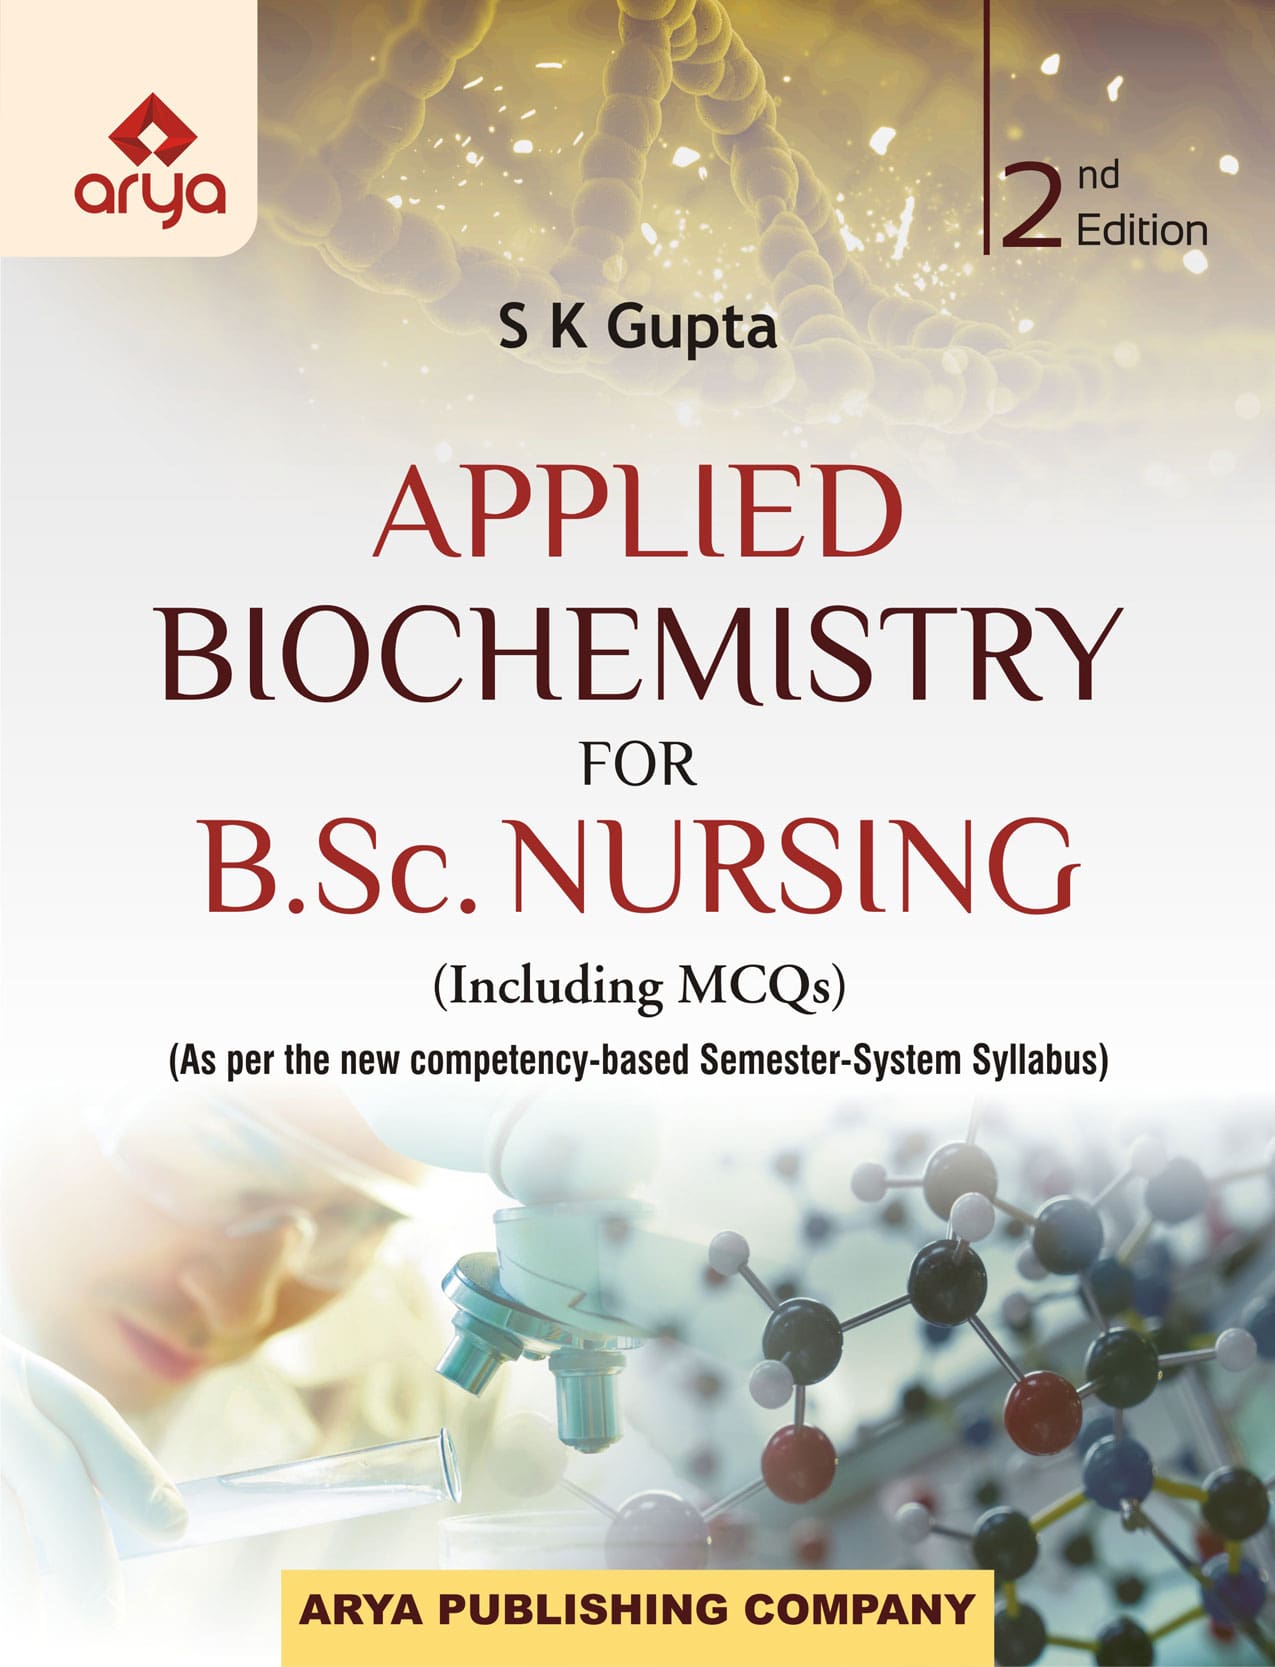 Applied Biochemistry for B.Sc. Nursing (including MCQs)